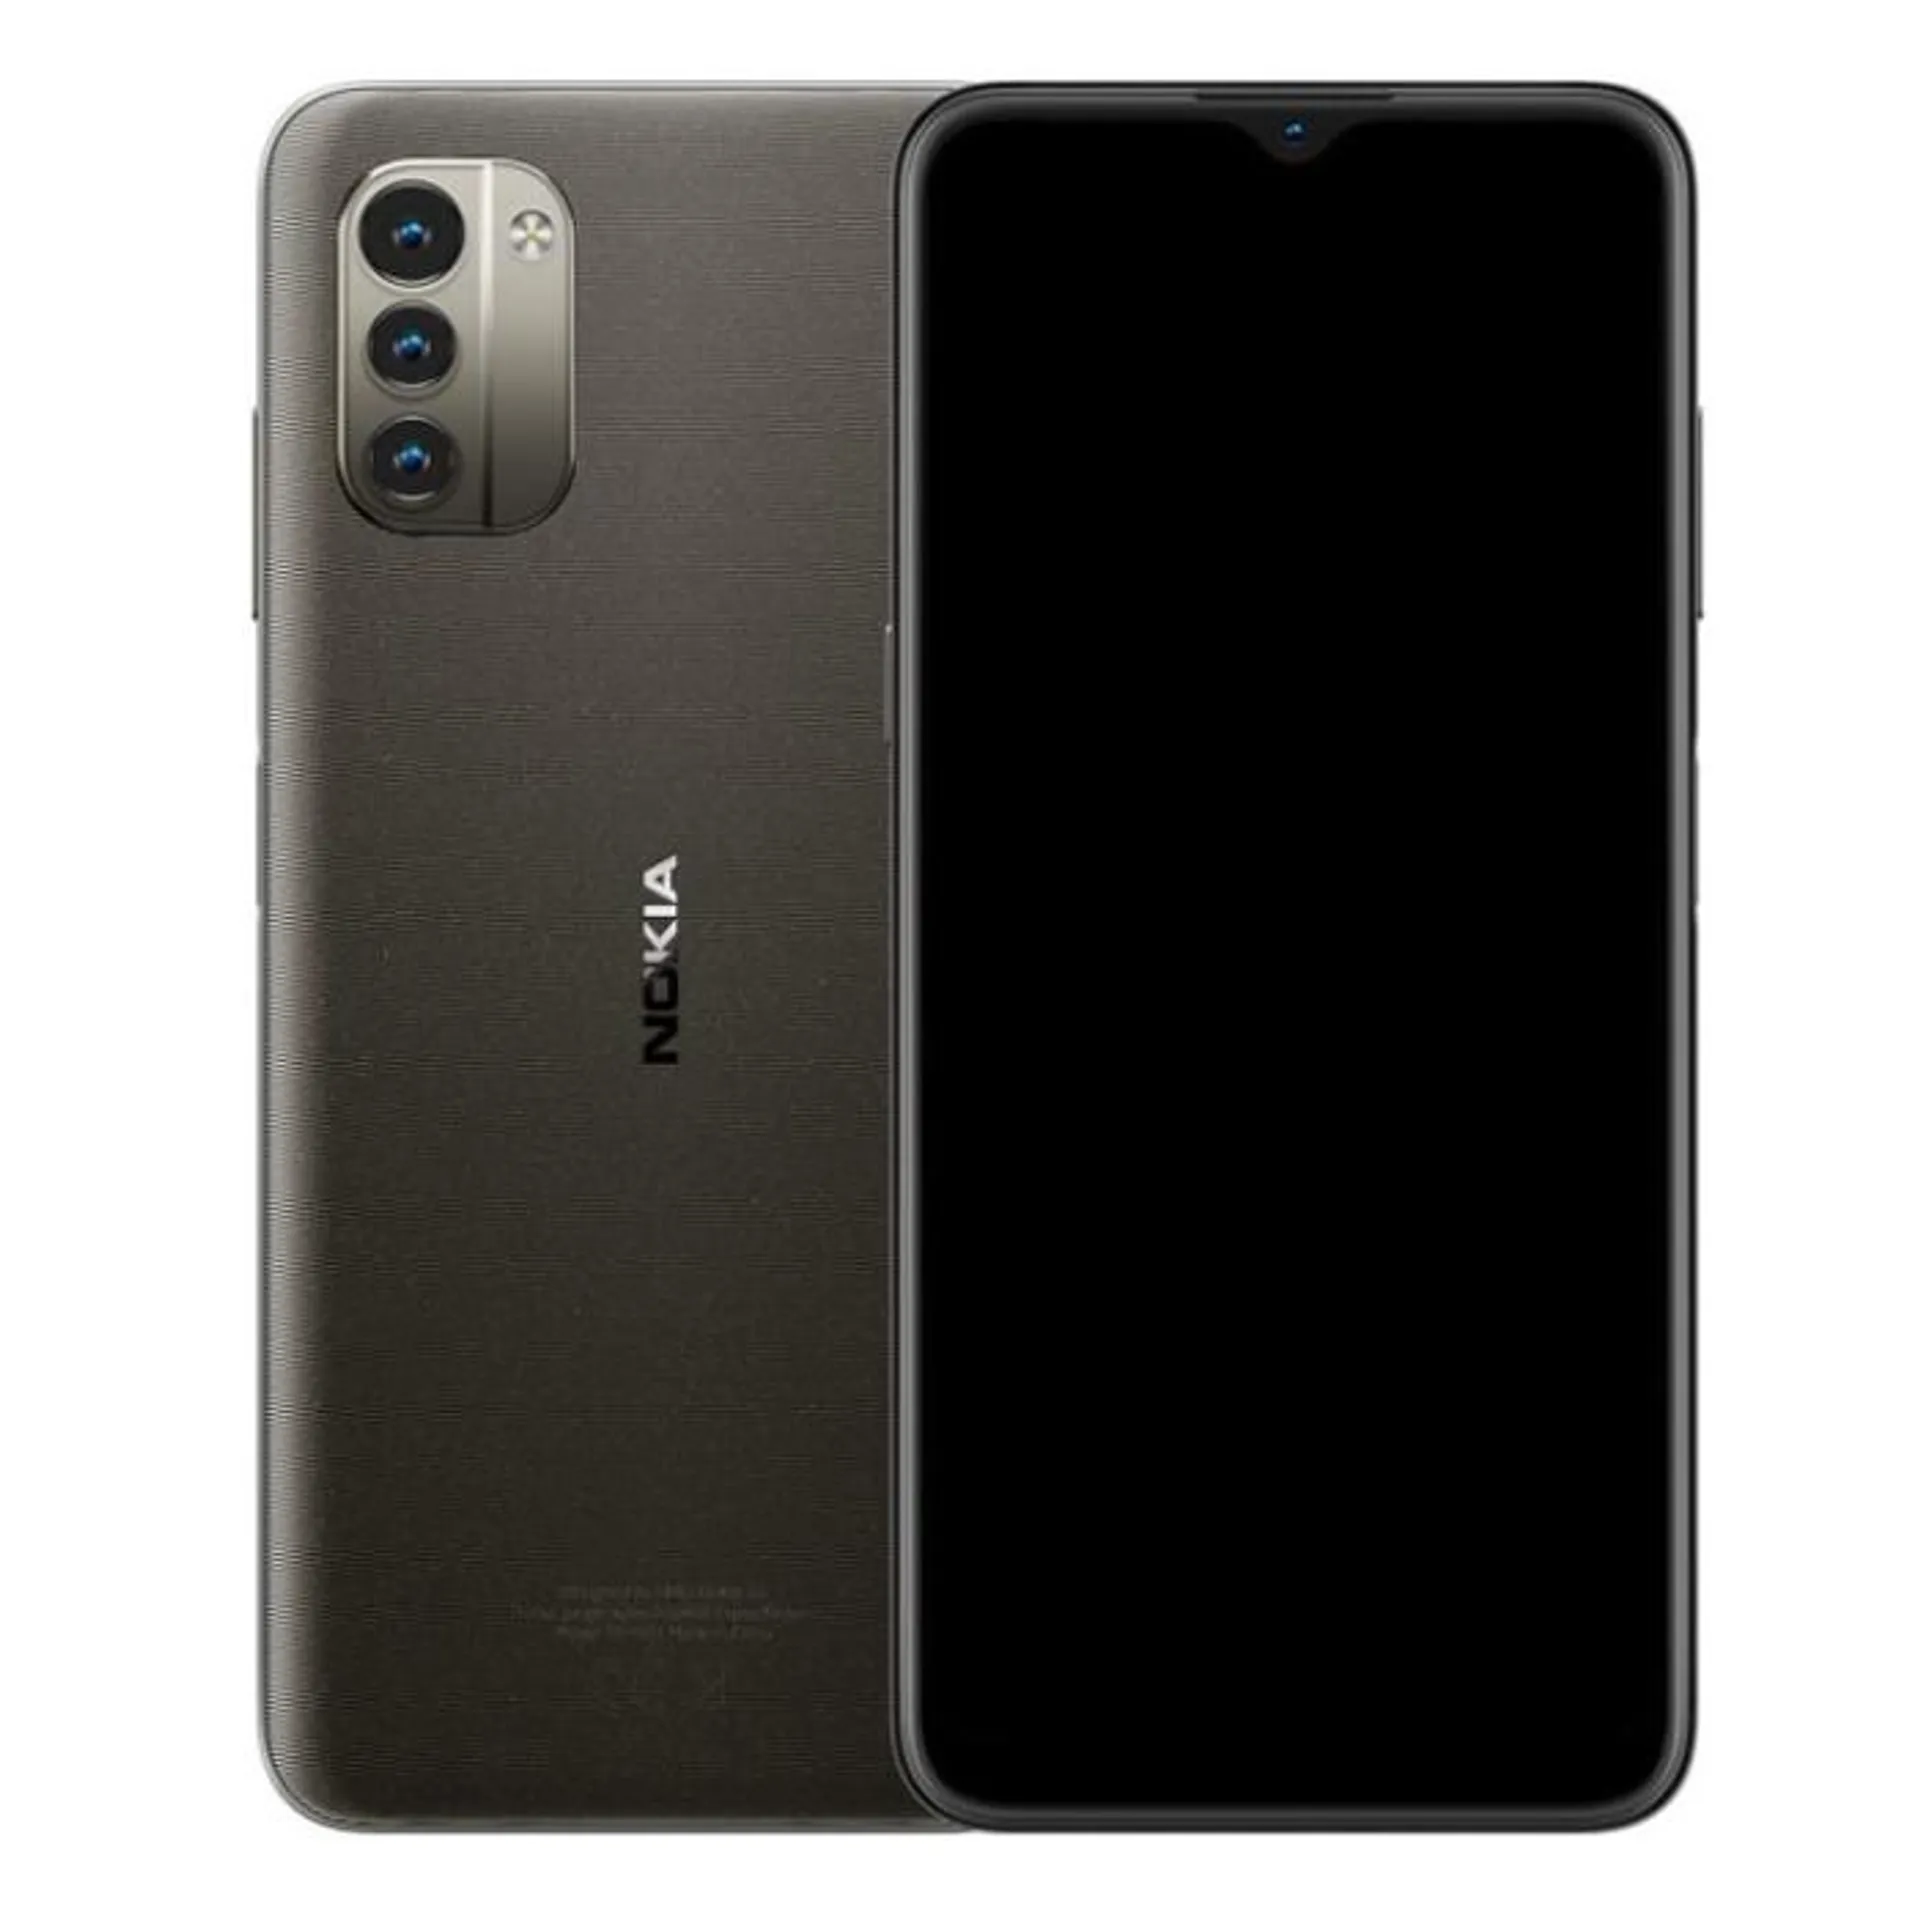 Nokia G11 6.5" 32GB Smartphone - Charcoal | 719901183691